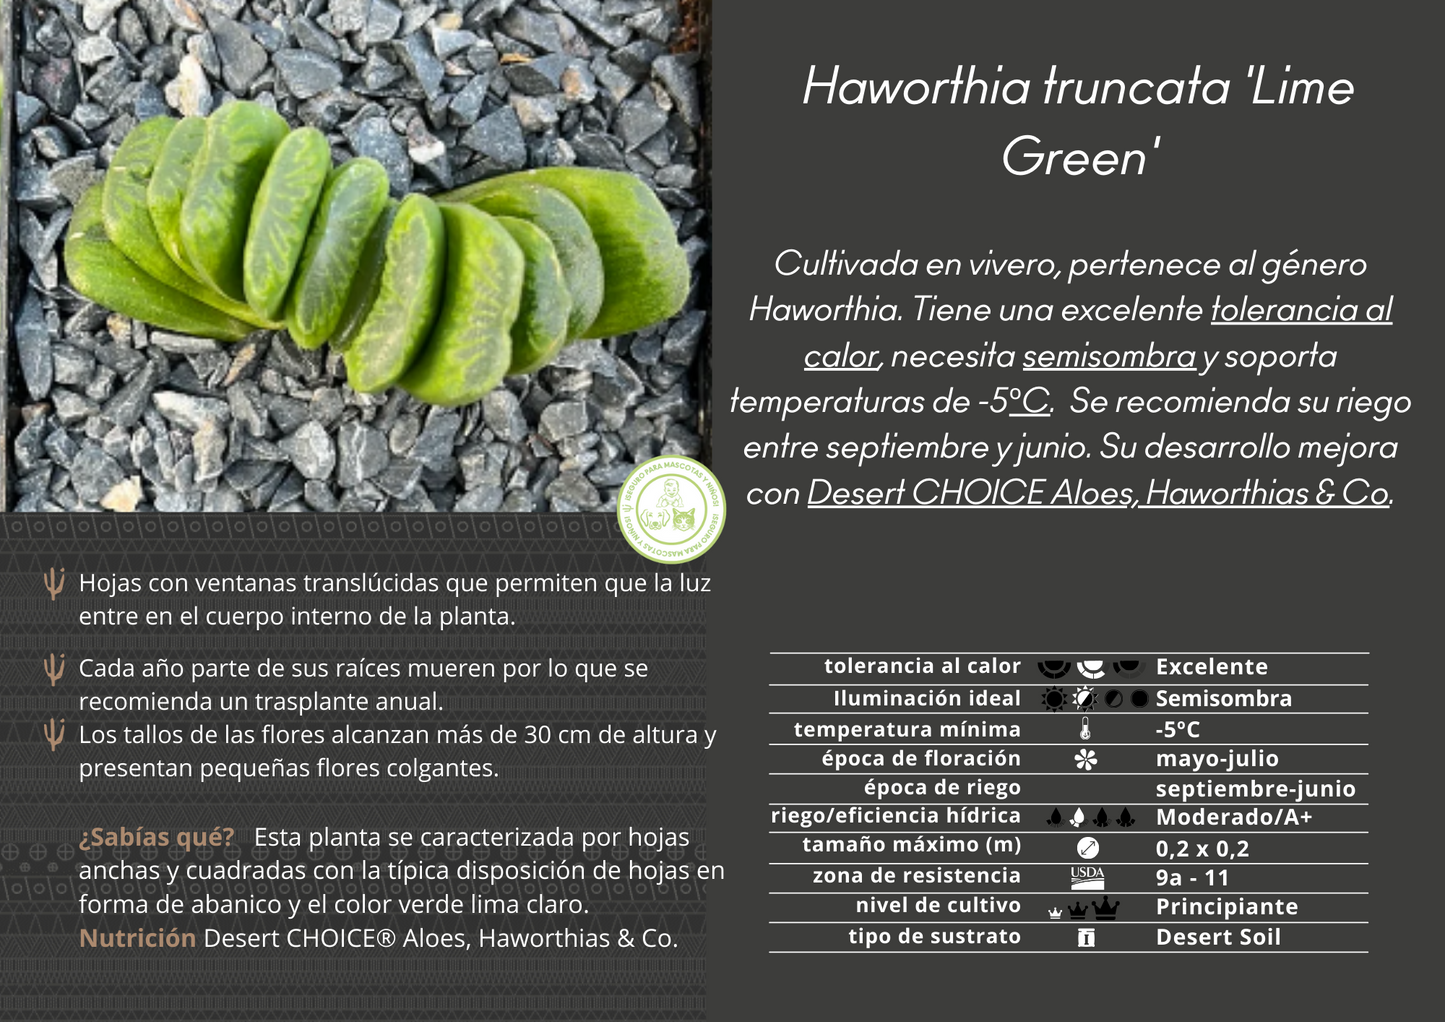 Haworthia truncata cv. lime green